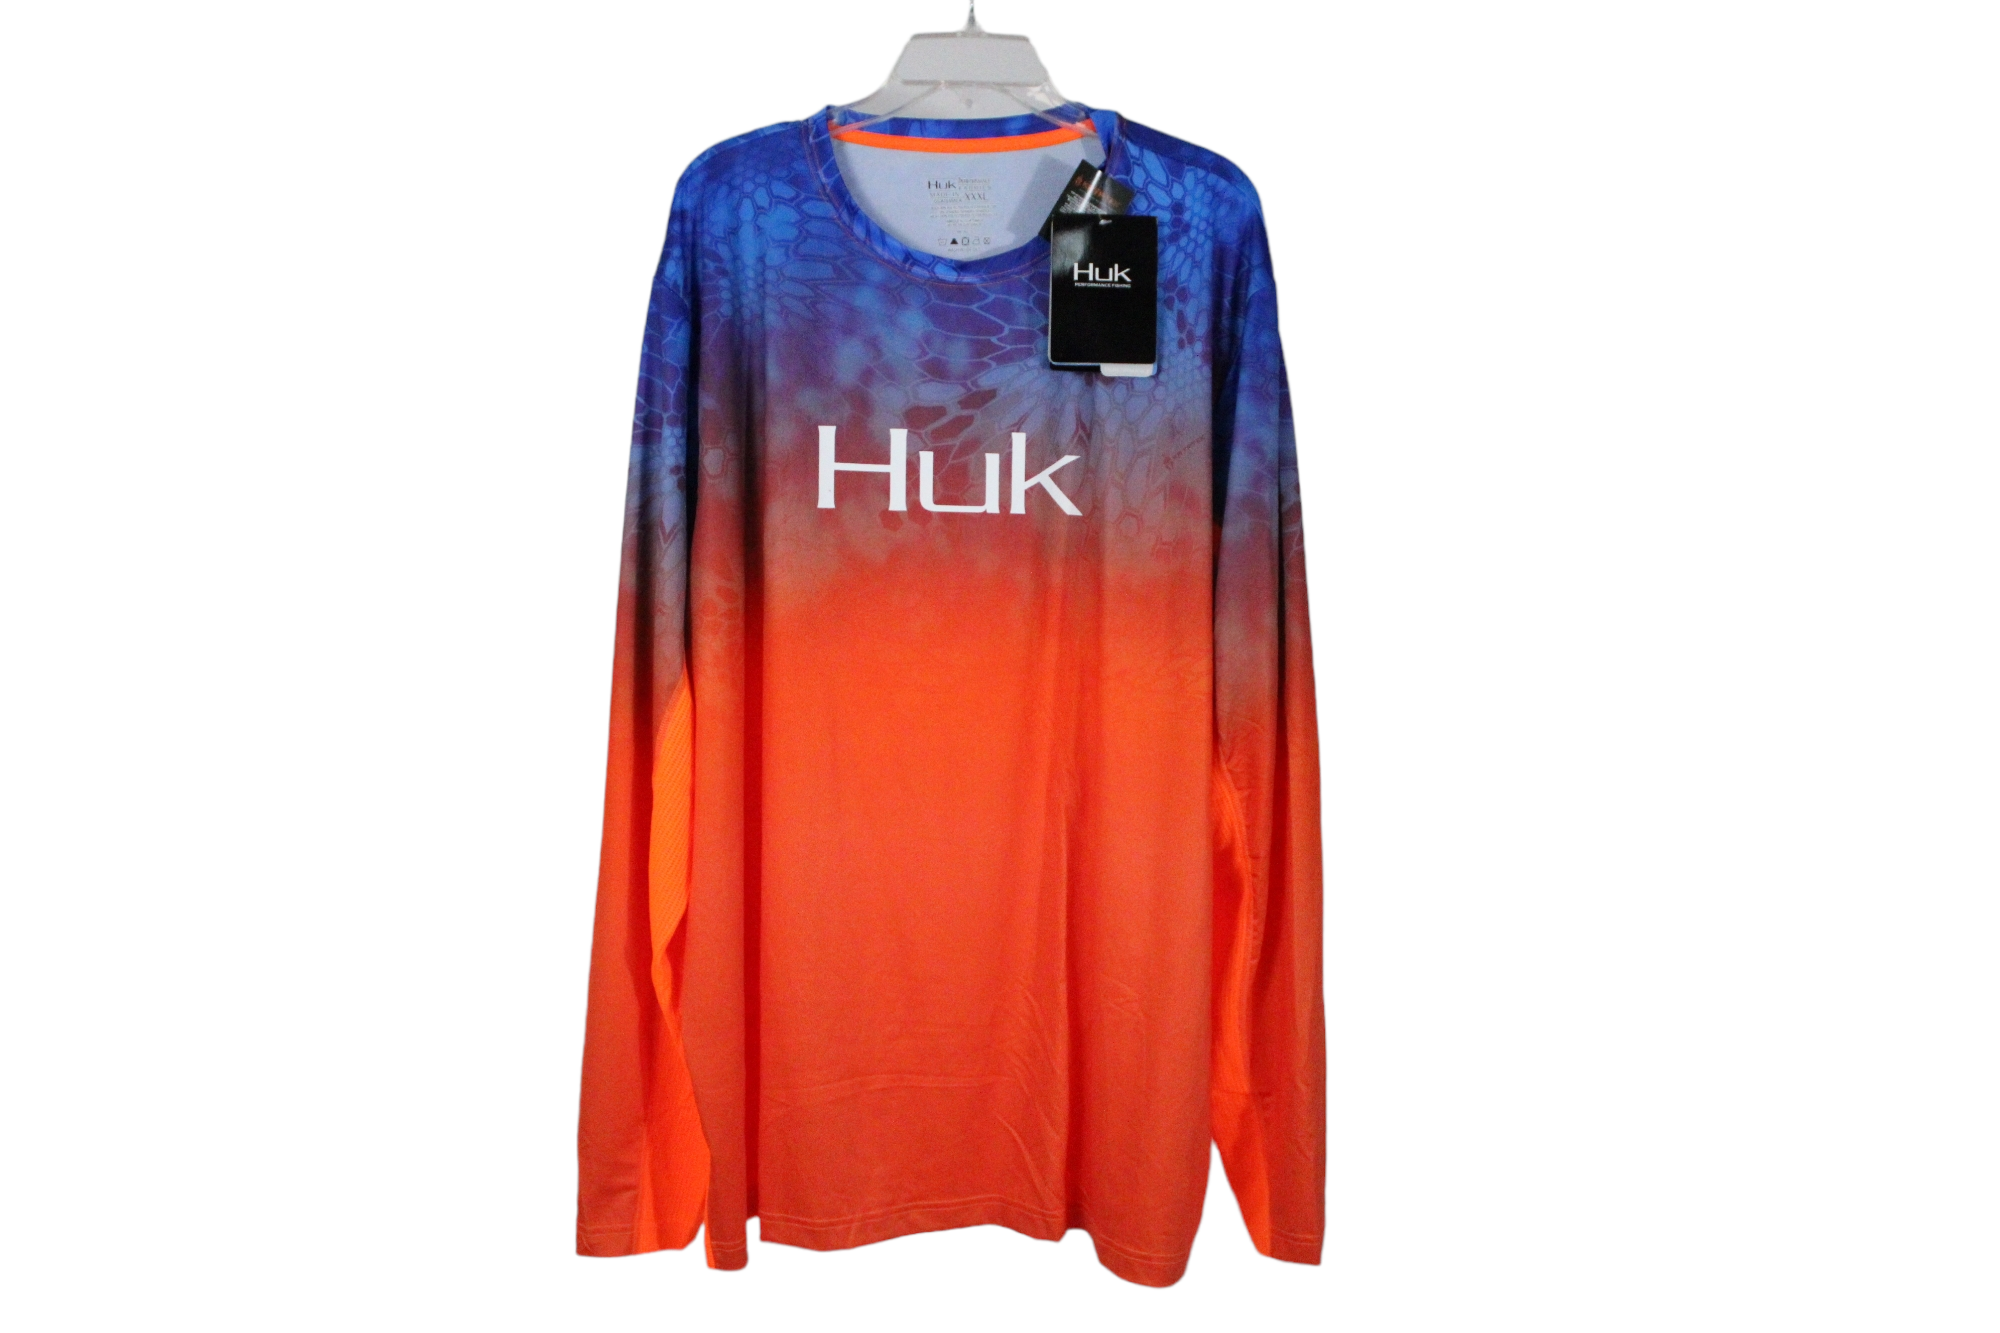 HUK Performance Fishing Shirt Long Sleeve Pullover Orange Shirt Size L